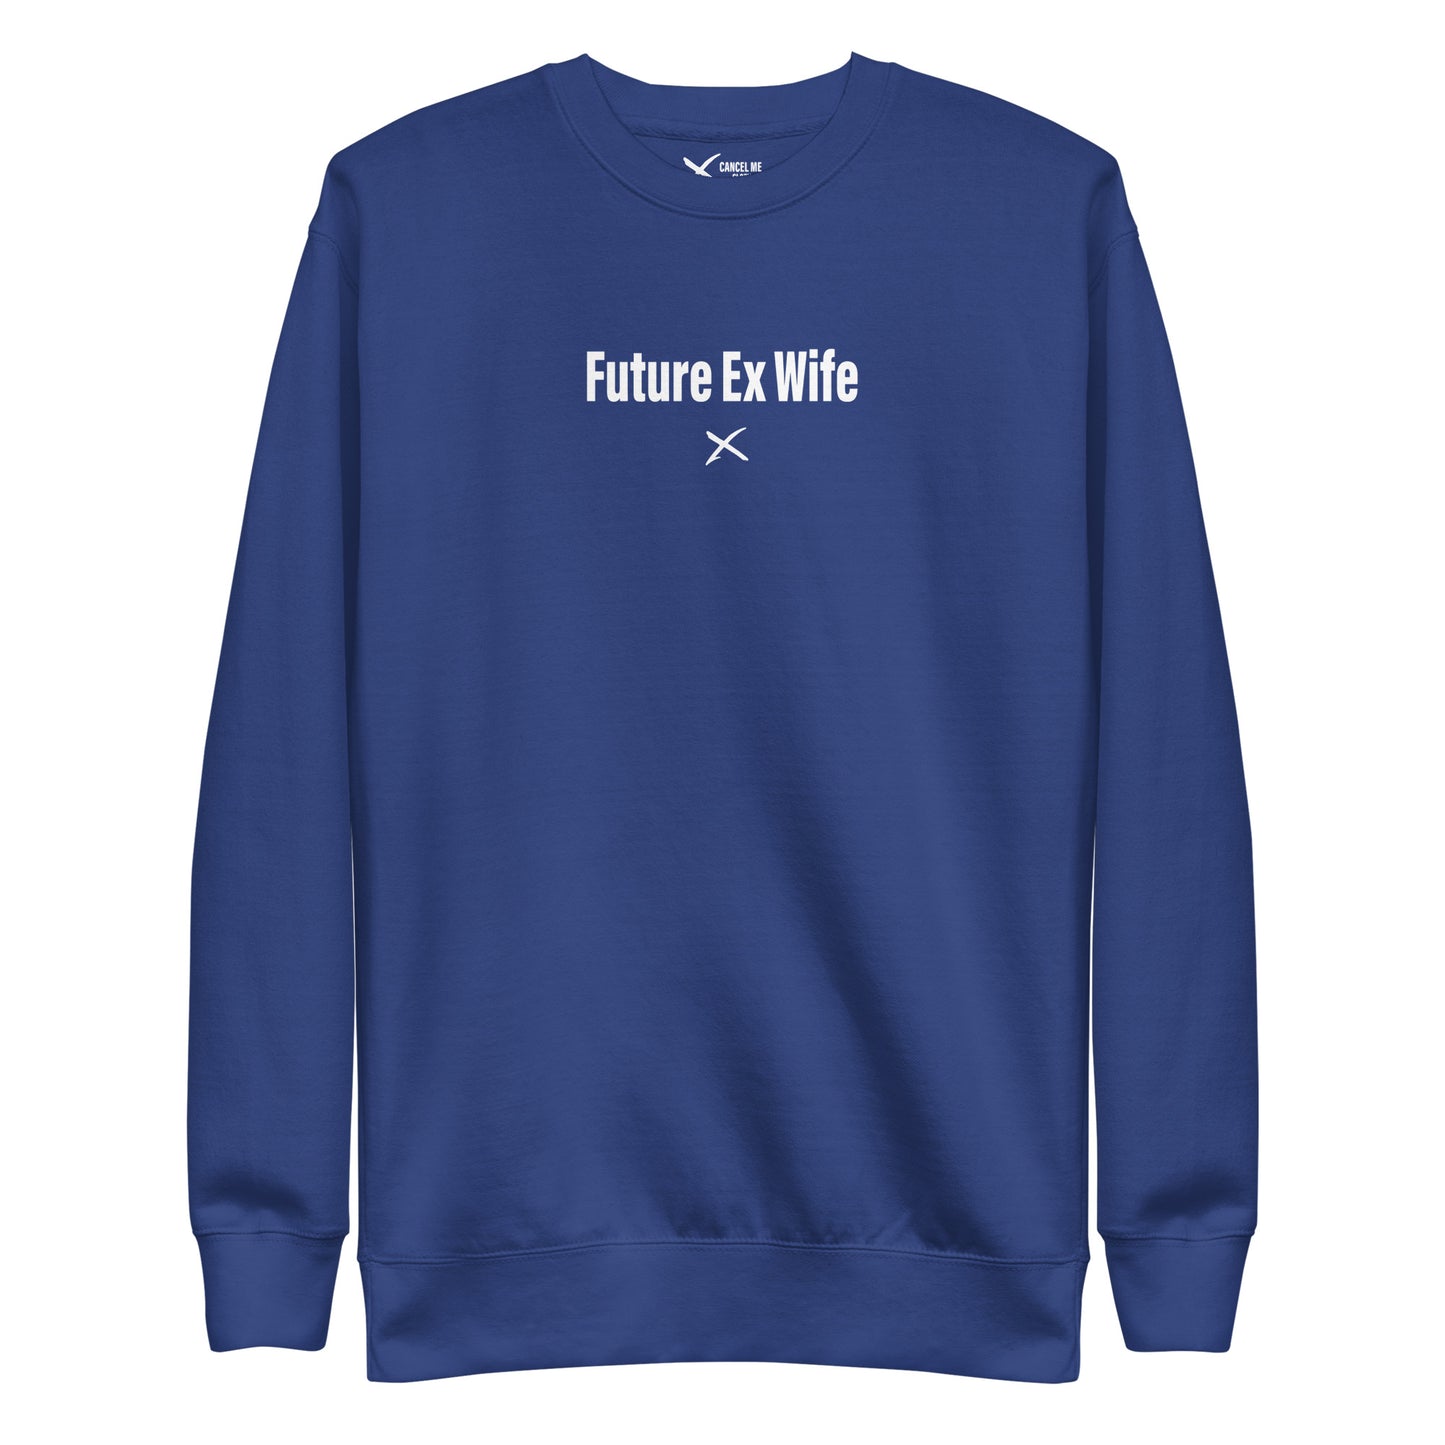 Future Ex Wife - Sweatshirt